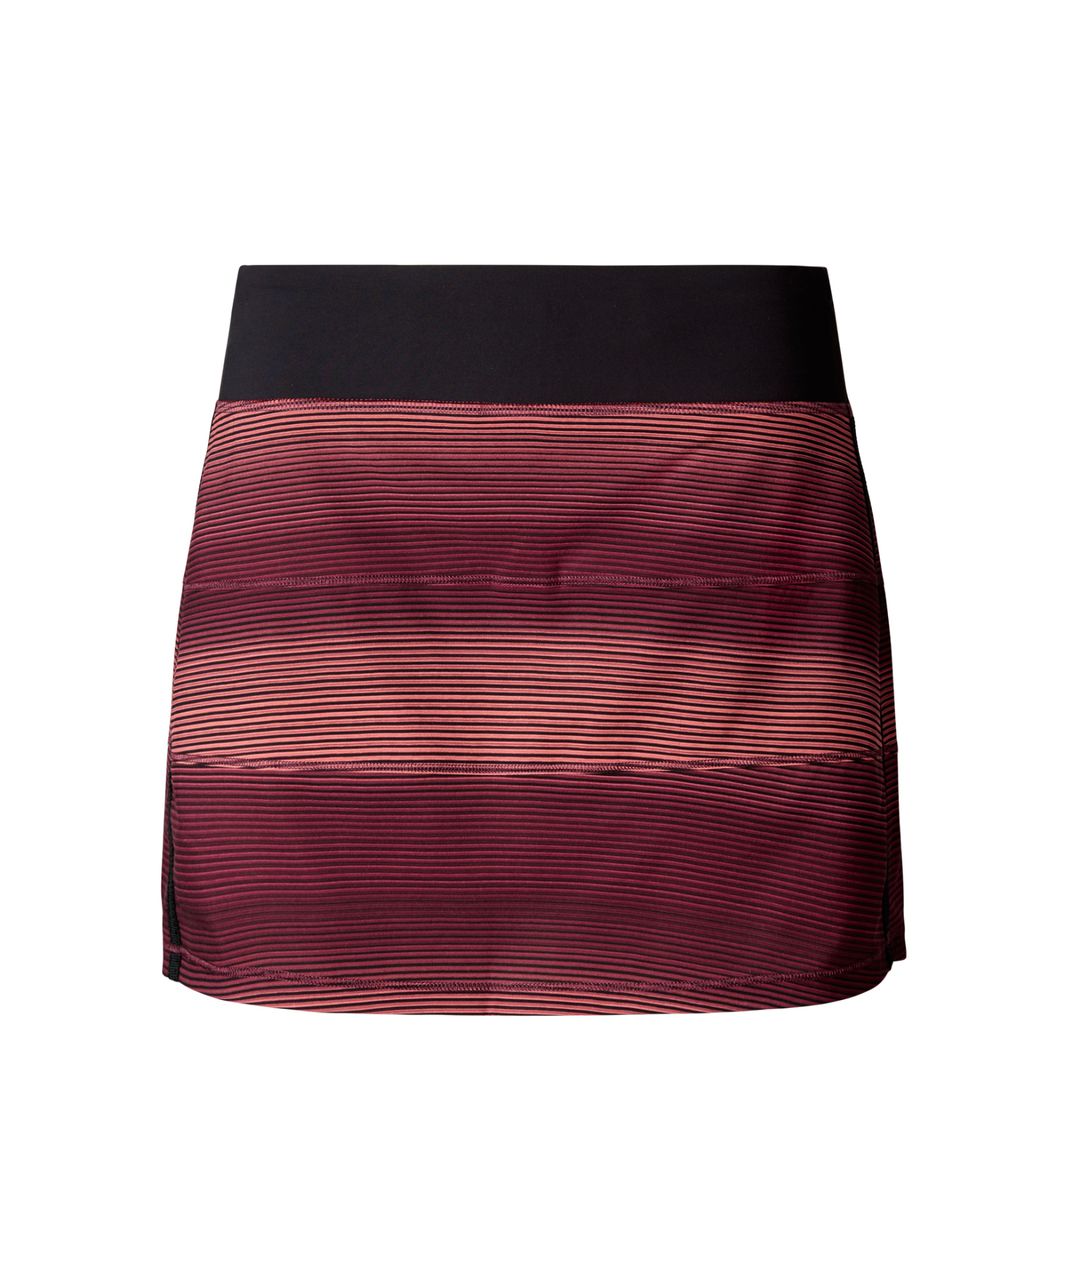 Lululemon Pace Rival Skirt II (Tall) - Simply Radiant Pink Paradise Black / Black